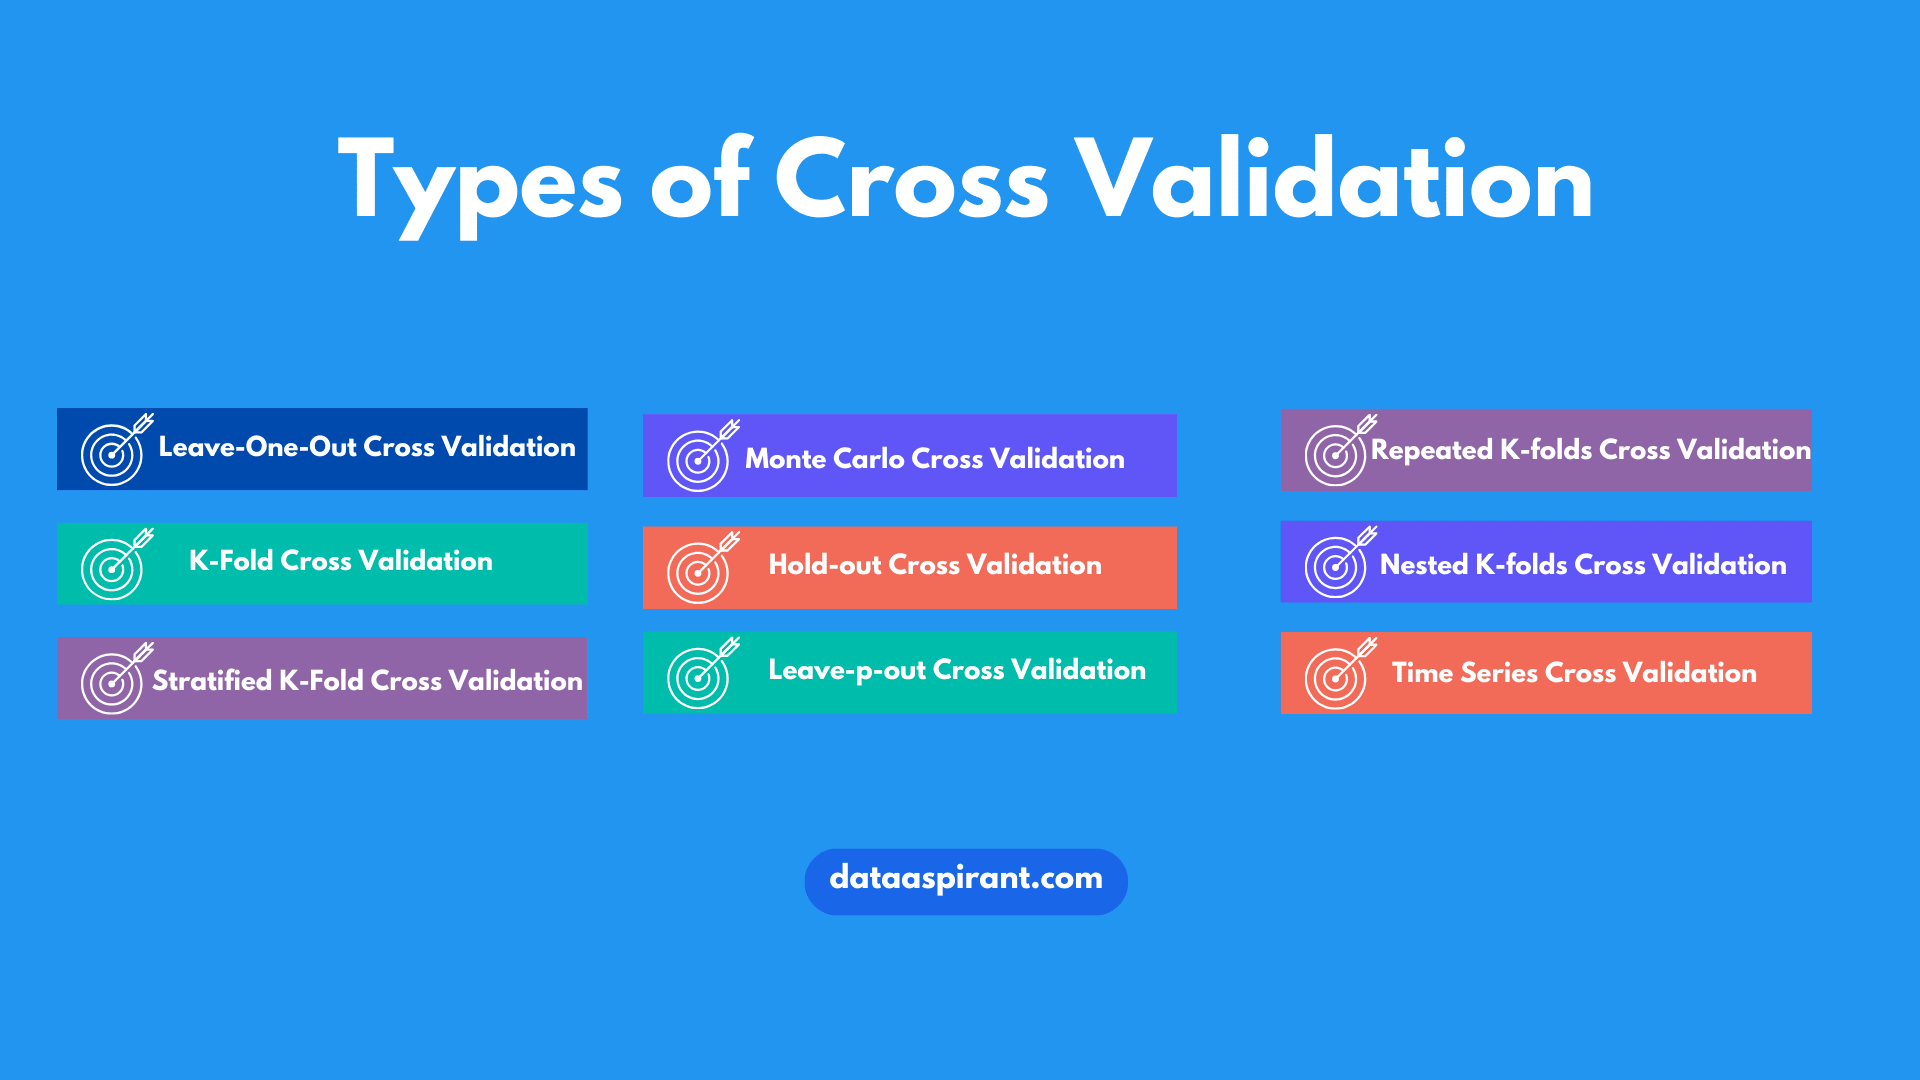 Types of Cross Validation